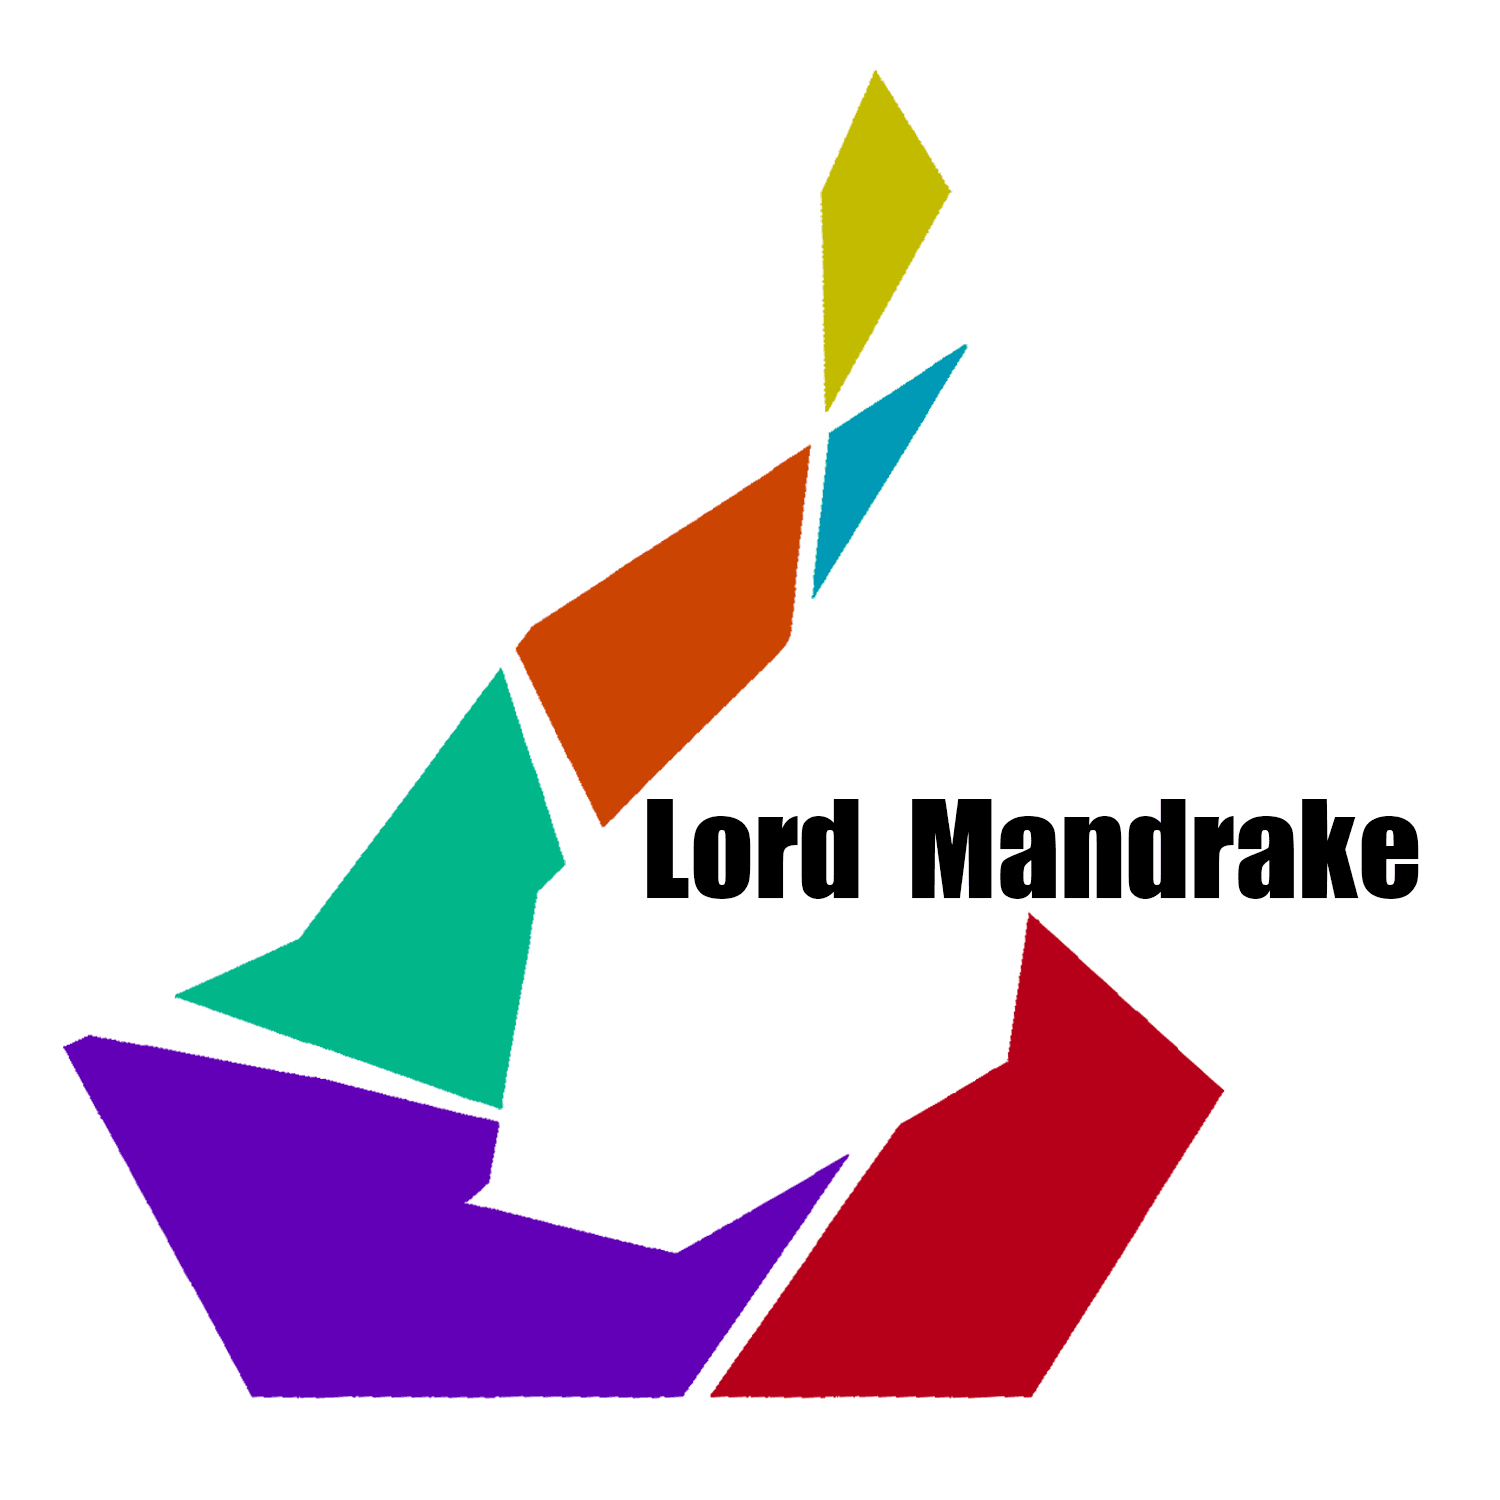 LordMandrake